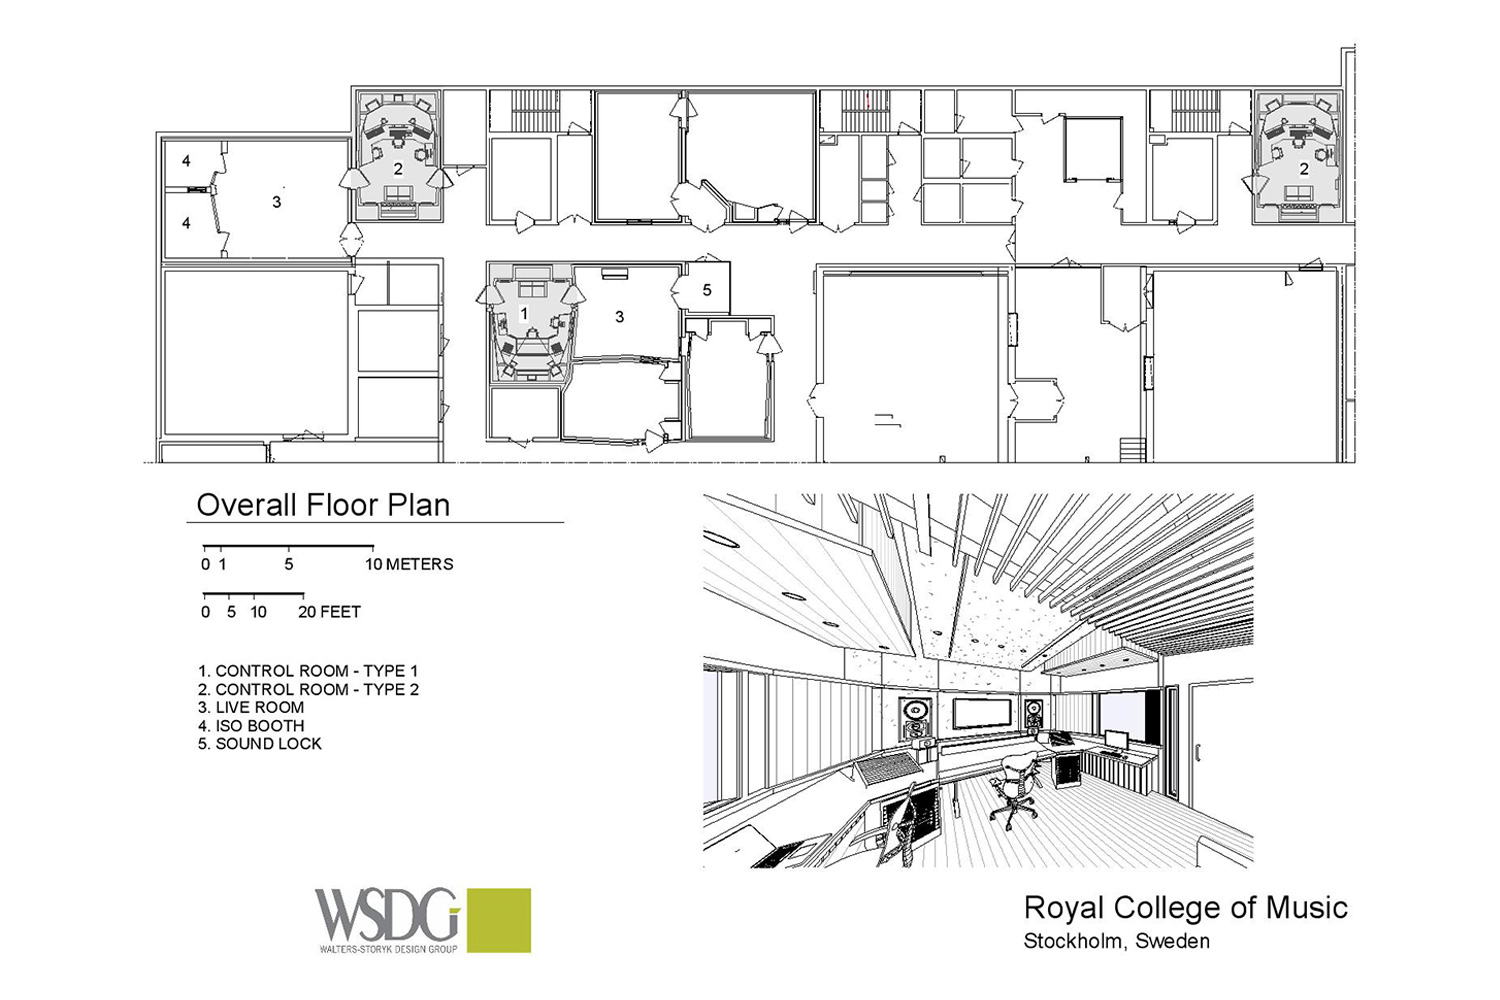 The Stockholm Royal College of Music. WSDG design presentation drawings 1.